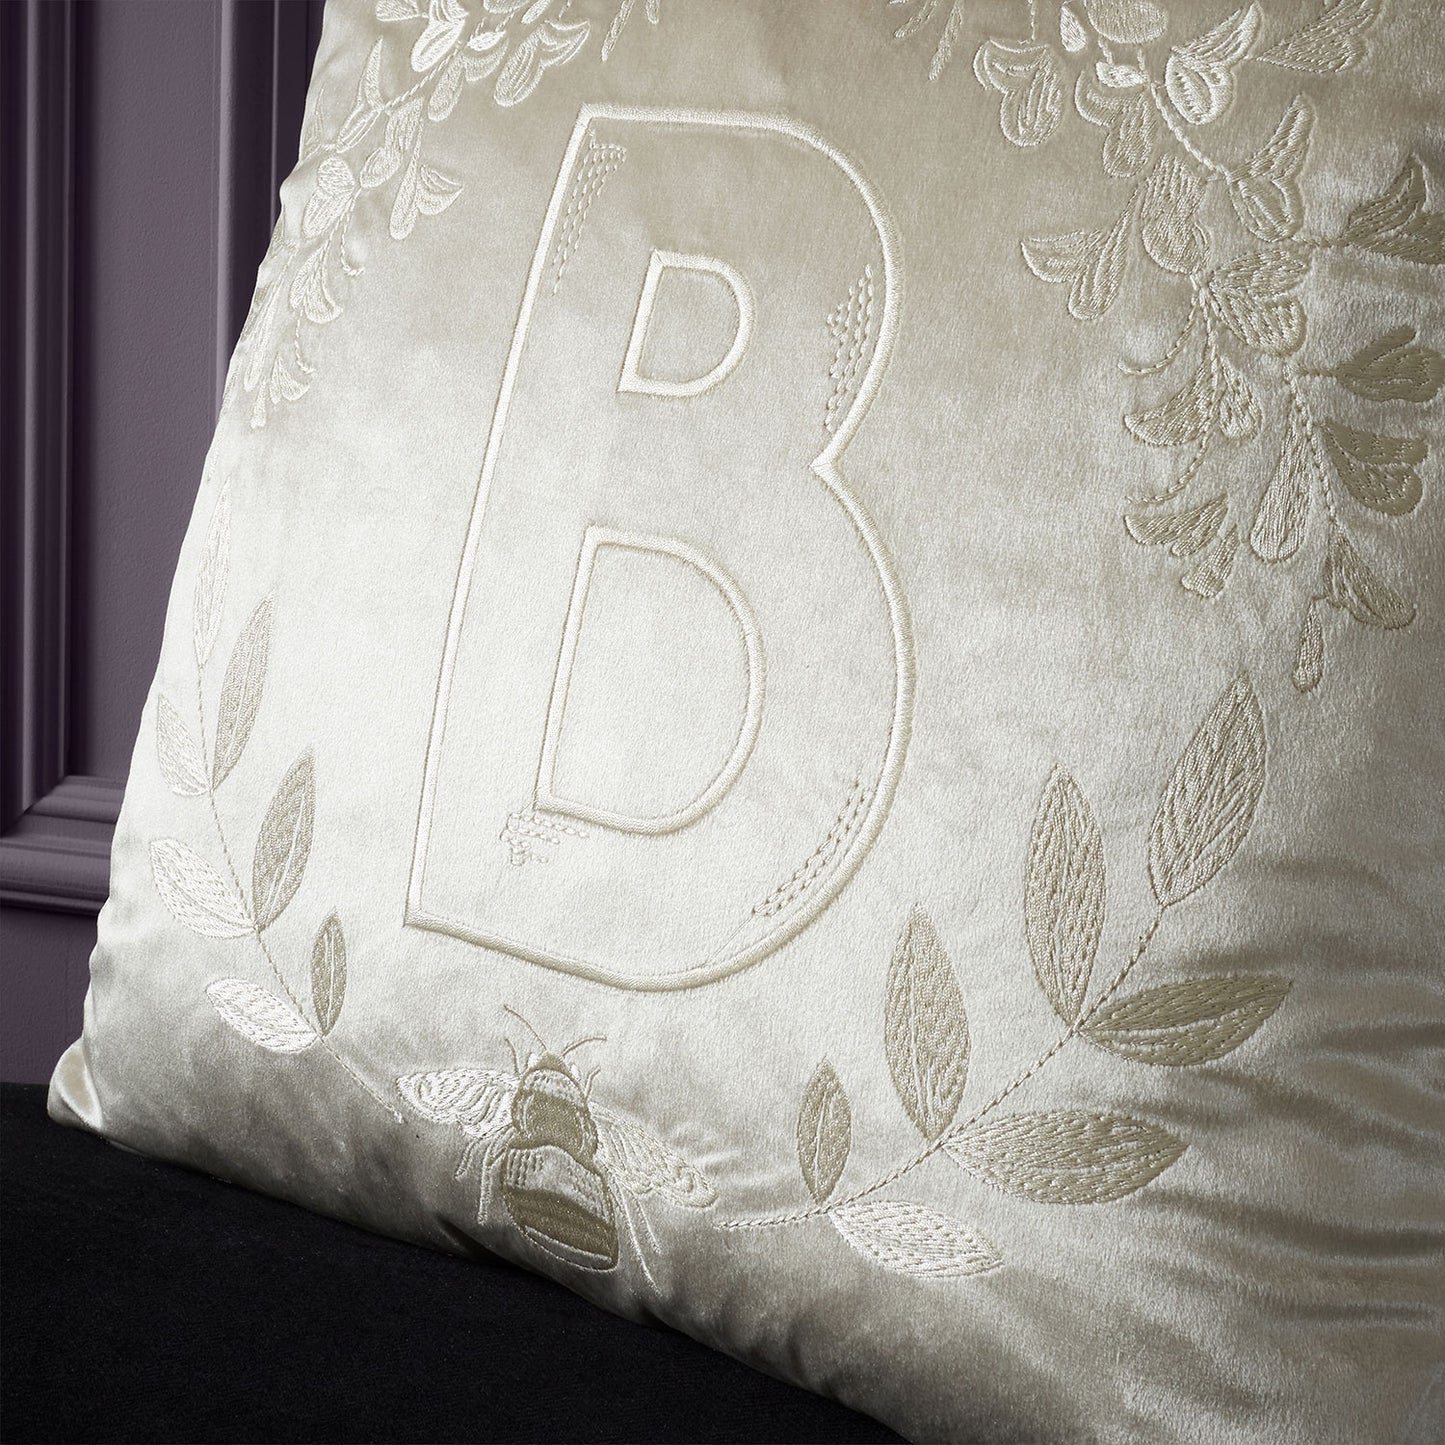 Bridgerton by Catherine Lansfield Regency Crown Natural Cushion (45cm x 45cm)